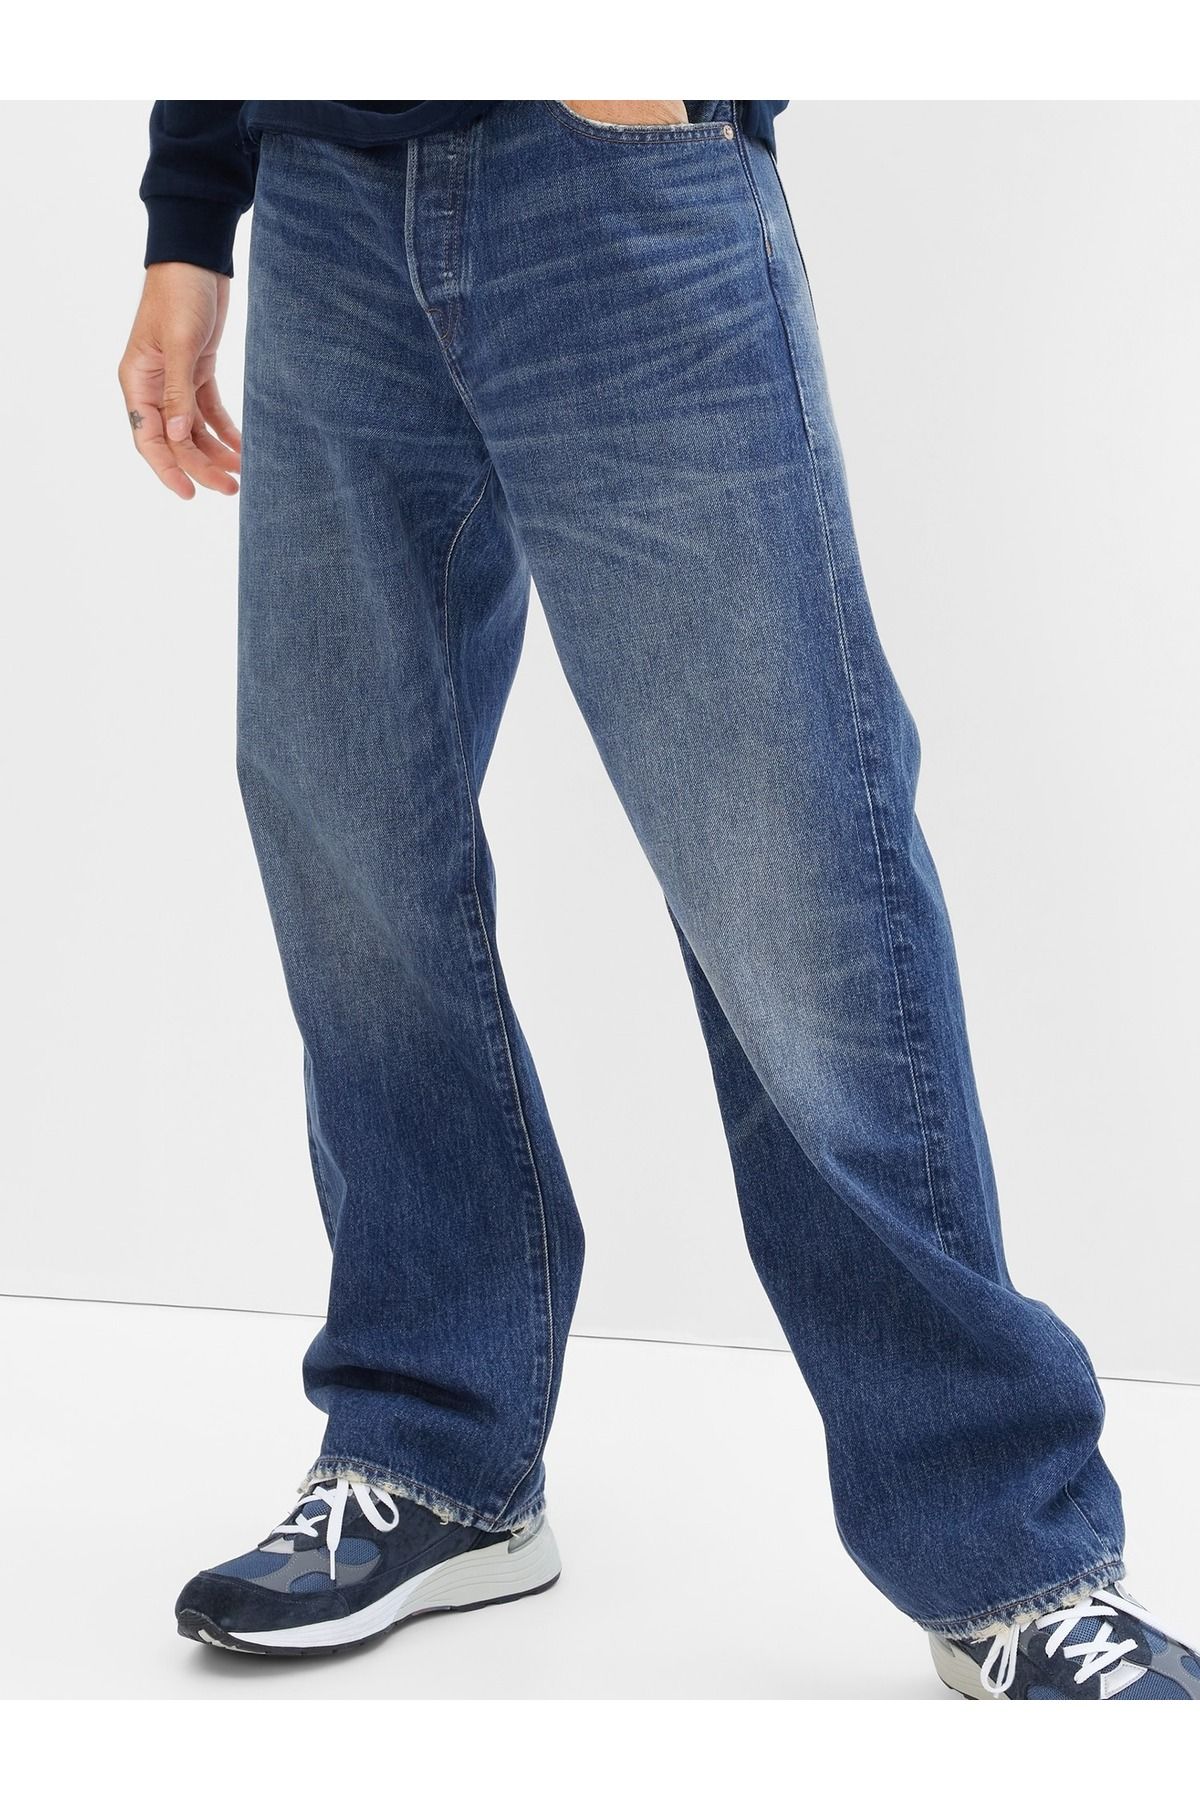 GAP شلوار جین گشاد Washwell™ دهه 90، مردانه 100% پنبه‌ای ارگانیک با دکمه‌دار